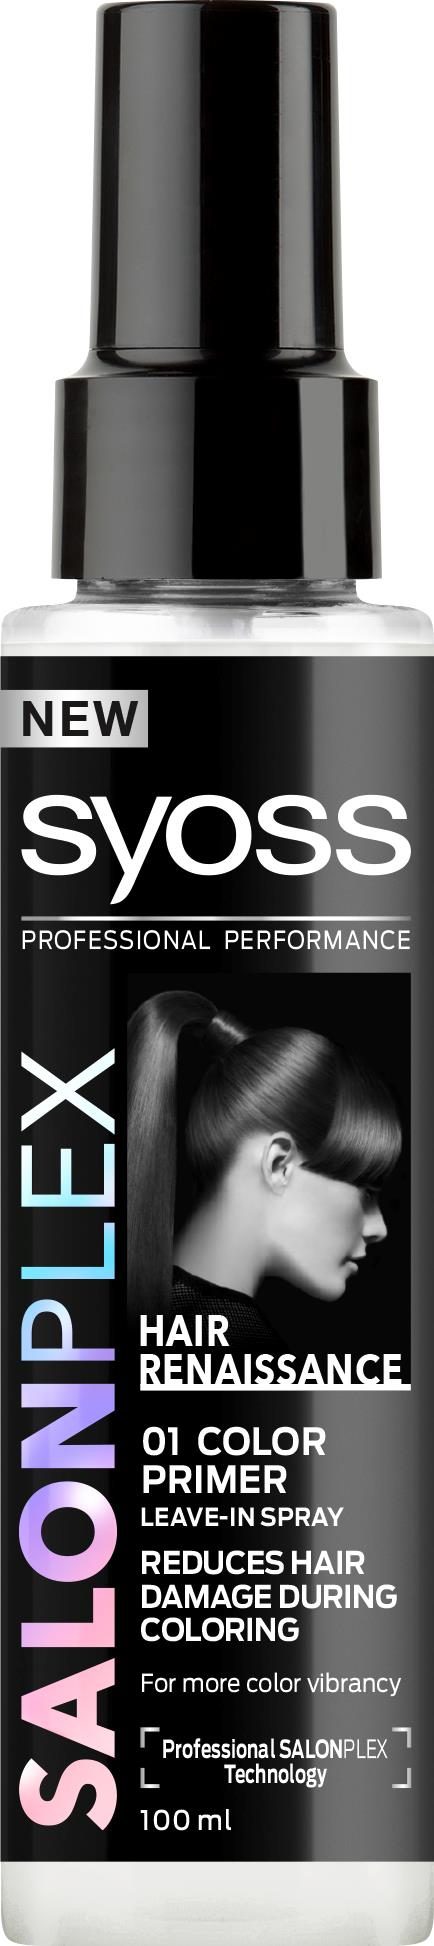 Syoss Salonplex Праймер для защиты волос перед окрашиванием